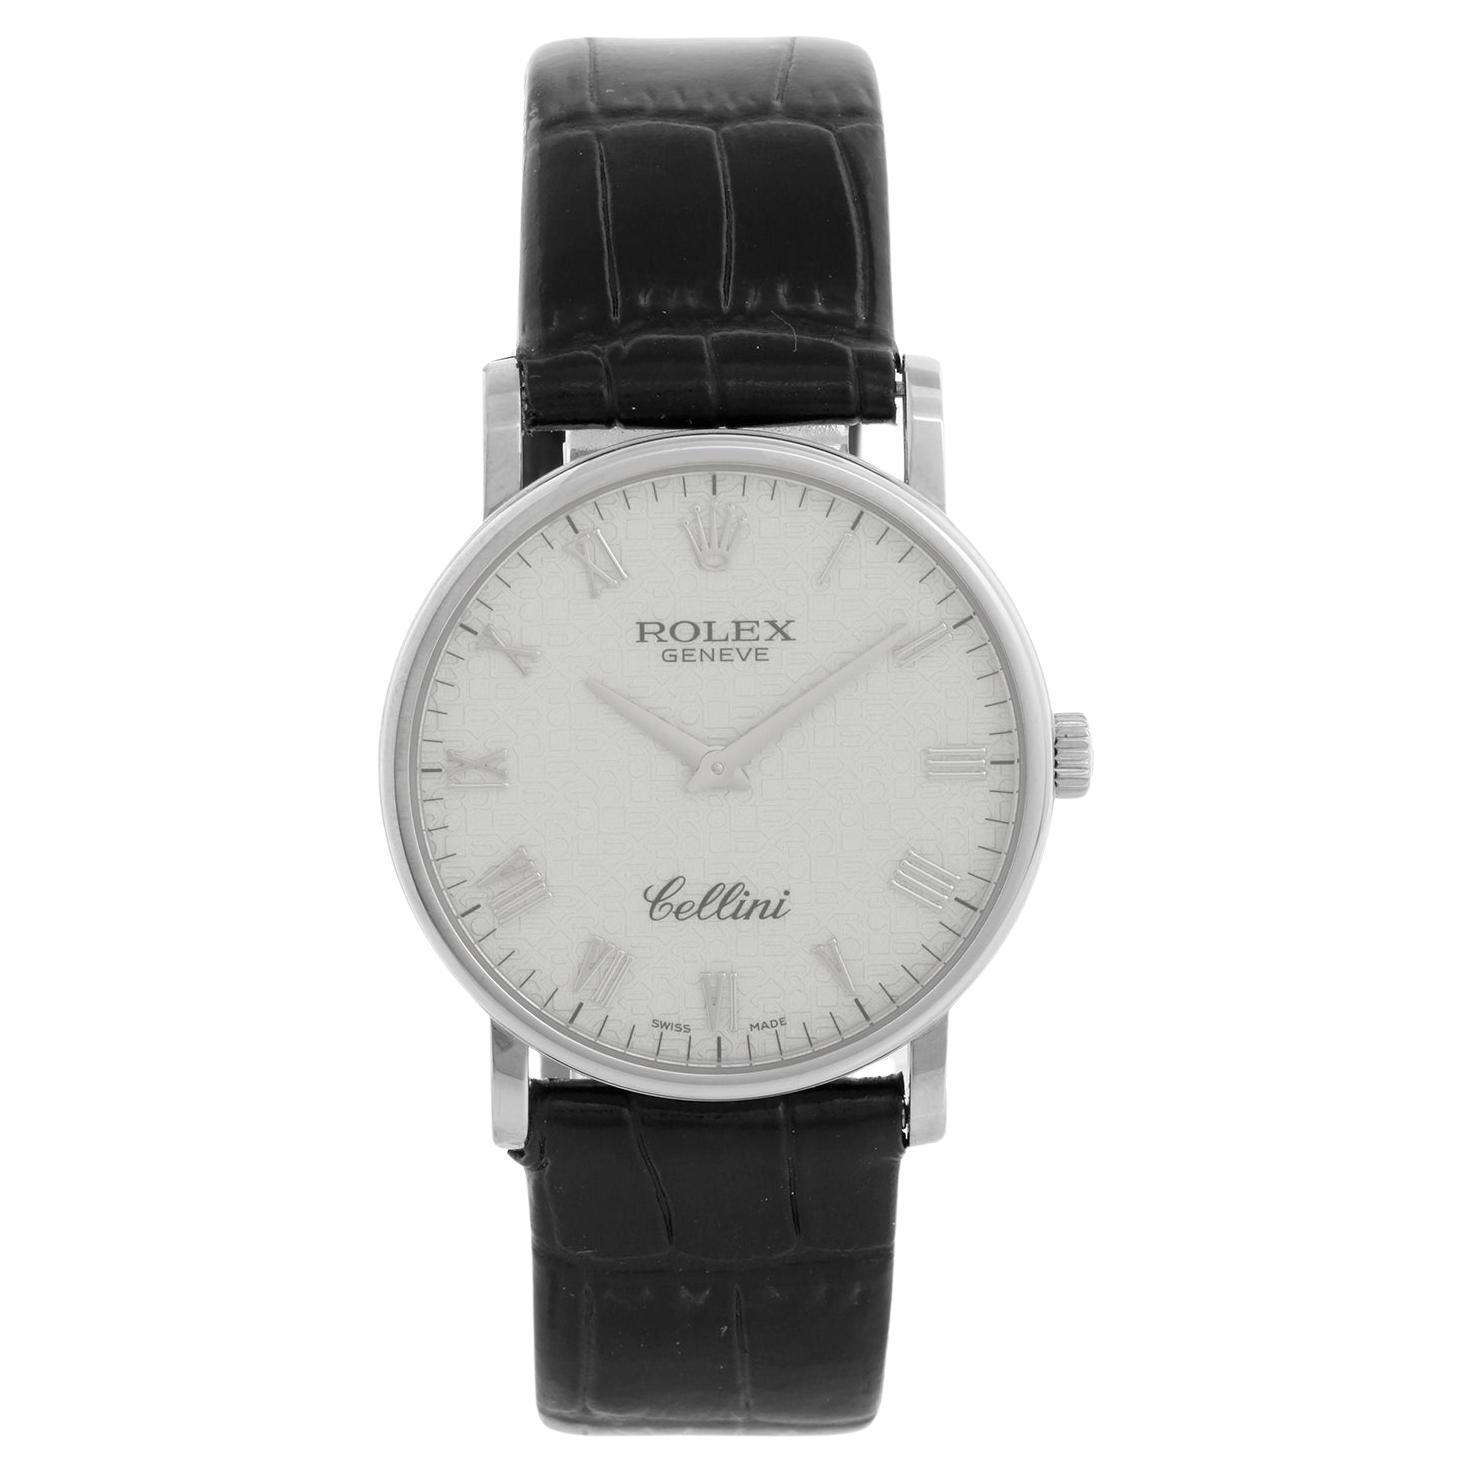 Rolex Cellini Classic 18k White Gold Men's Watch 5115 For Sale